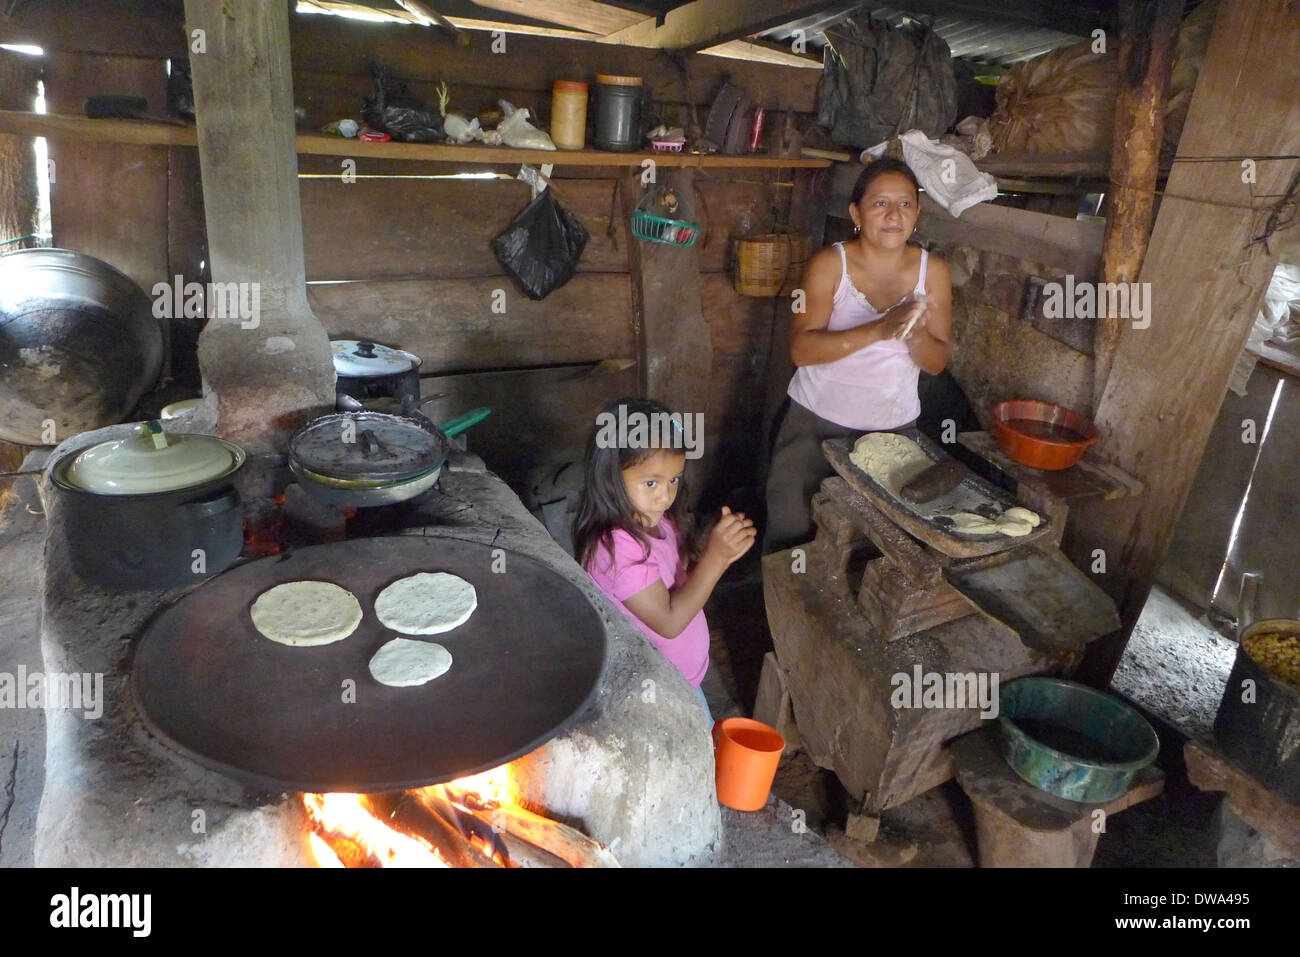 https://c8.alamy.com/comp/DWA495/el-salvador-jujutla-poor-farming-community-mother-and-girl-making-DWA495.jpg